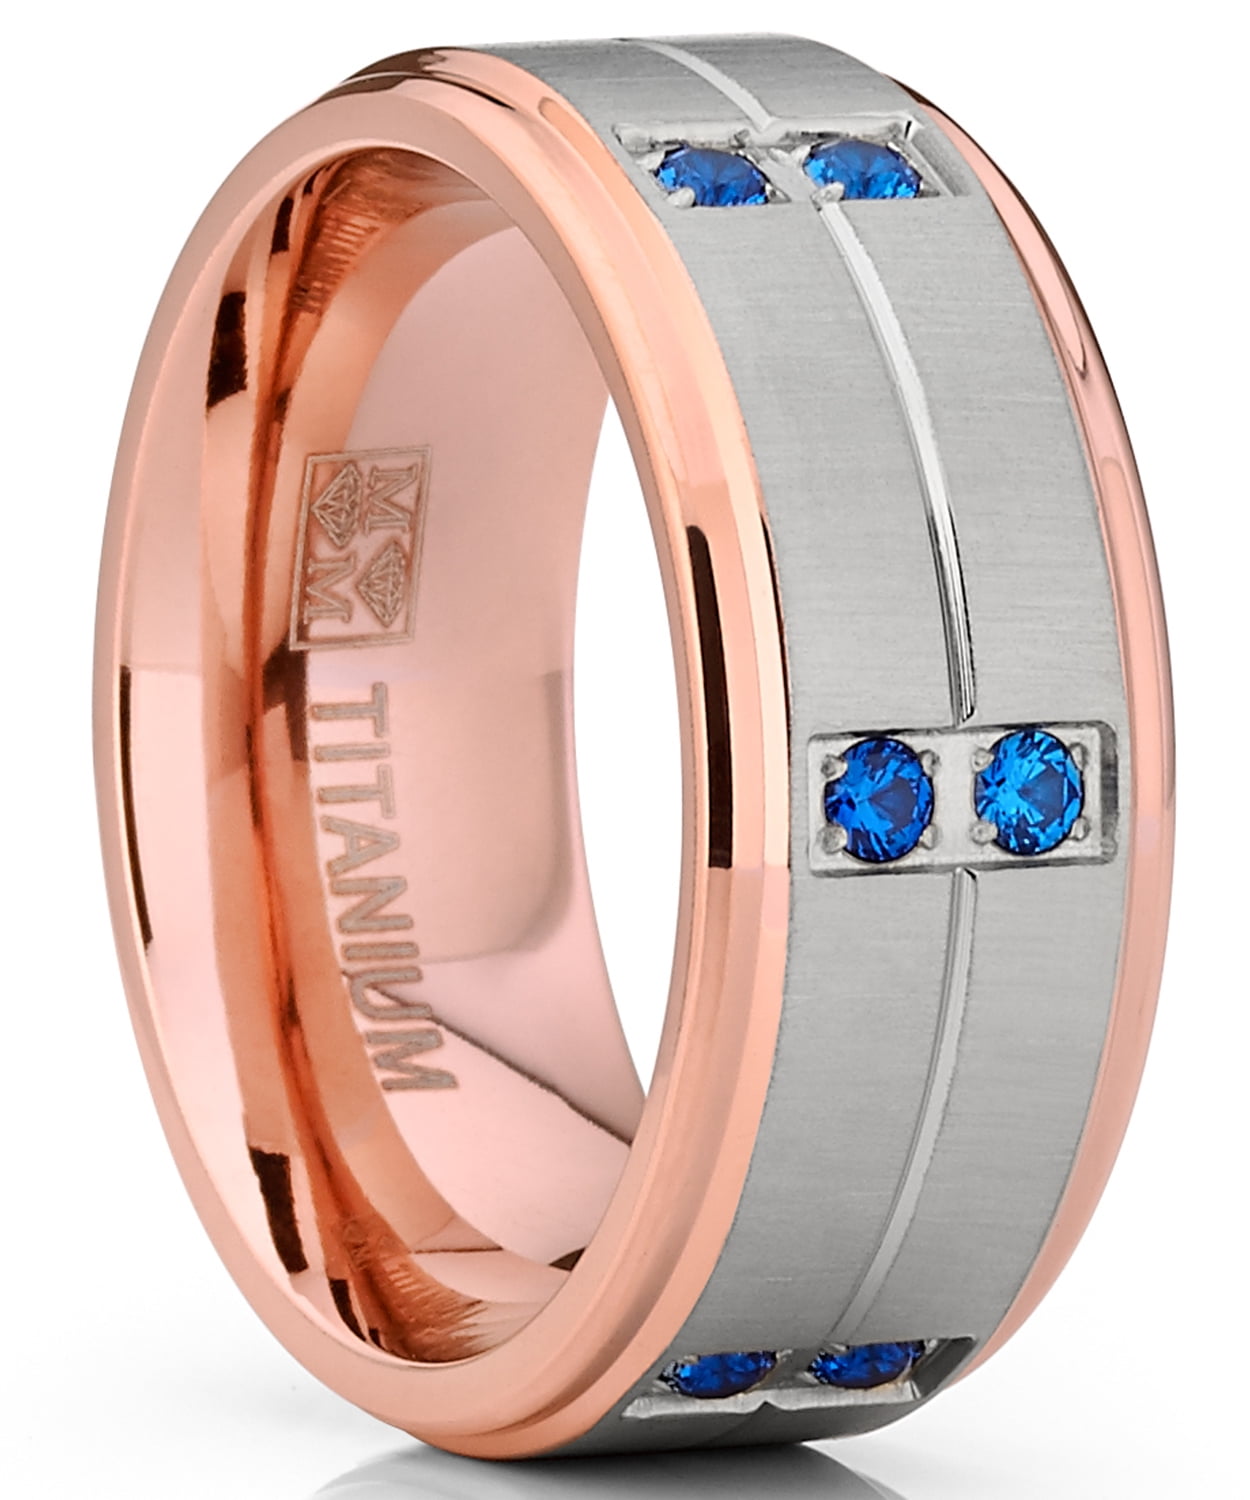 Mens Titanium Ring-8mm Wide Simulated Diamonds Classic Unisex Gold Tone Wedding Engagement Band Ring